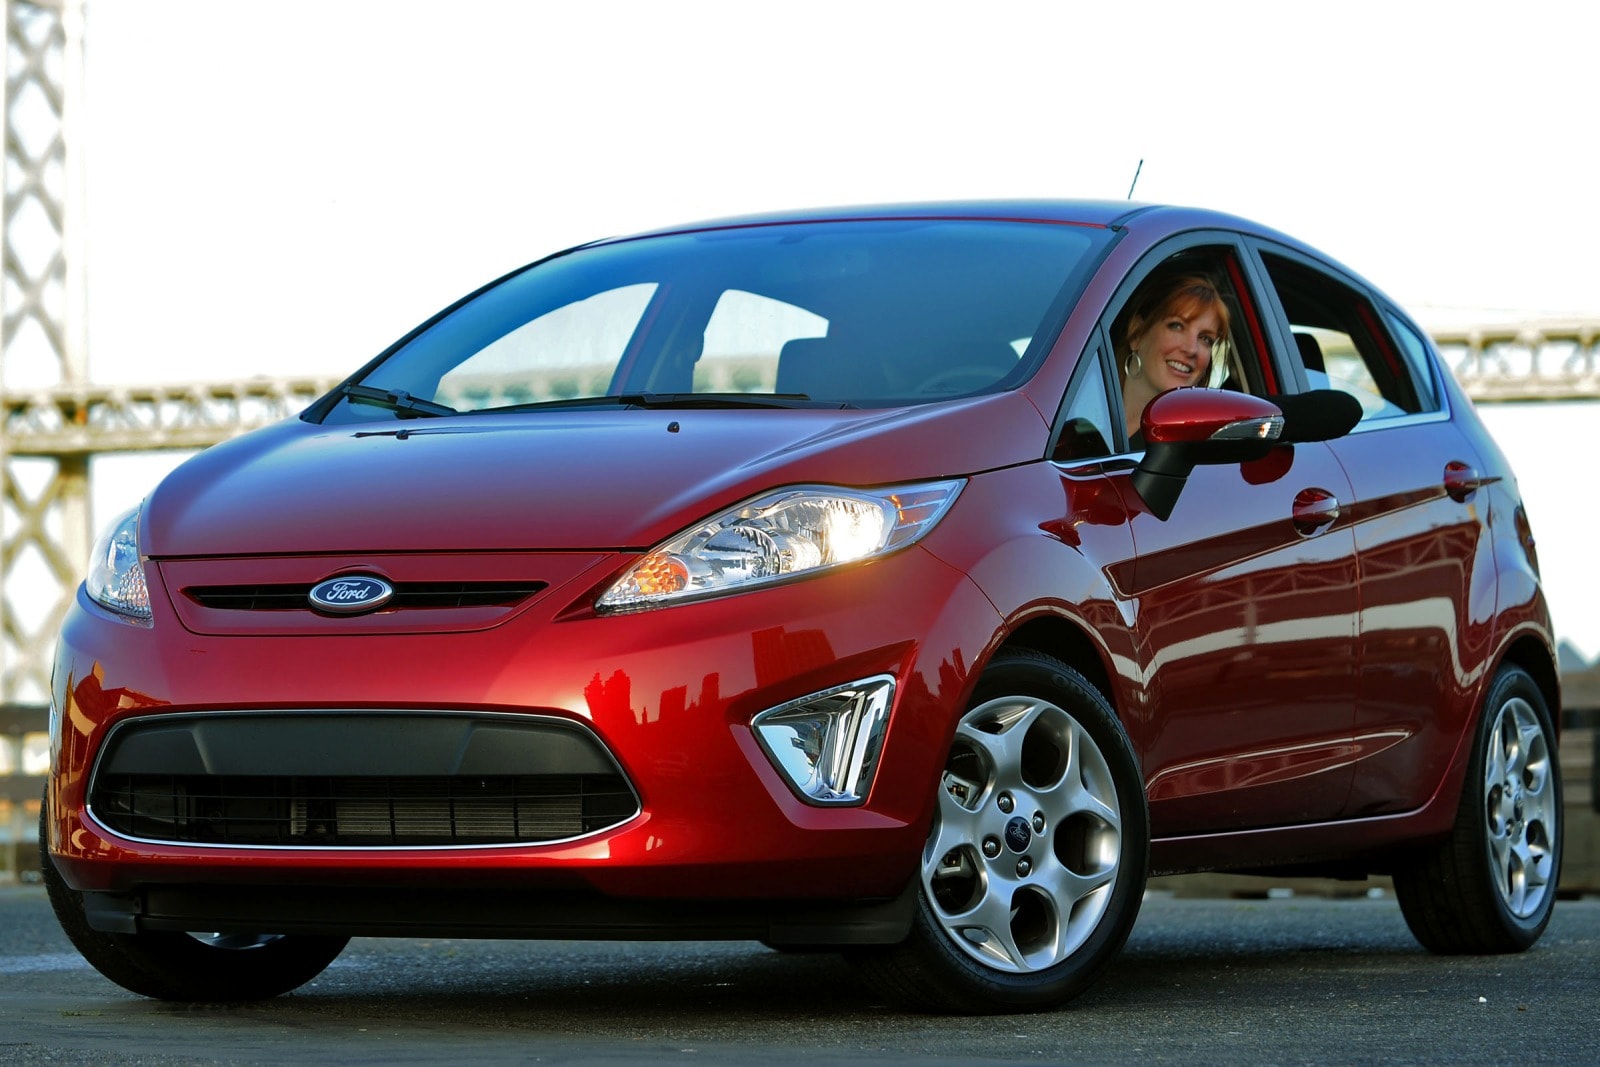 Used 2013 Ford Fiesta Hatchback Review | Edmunds